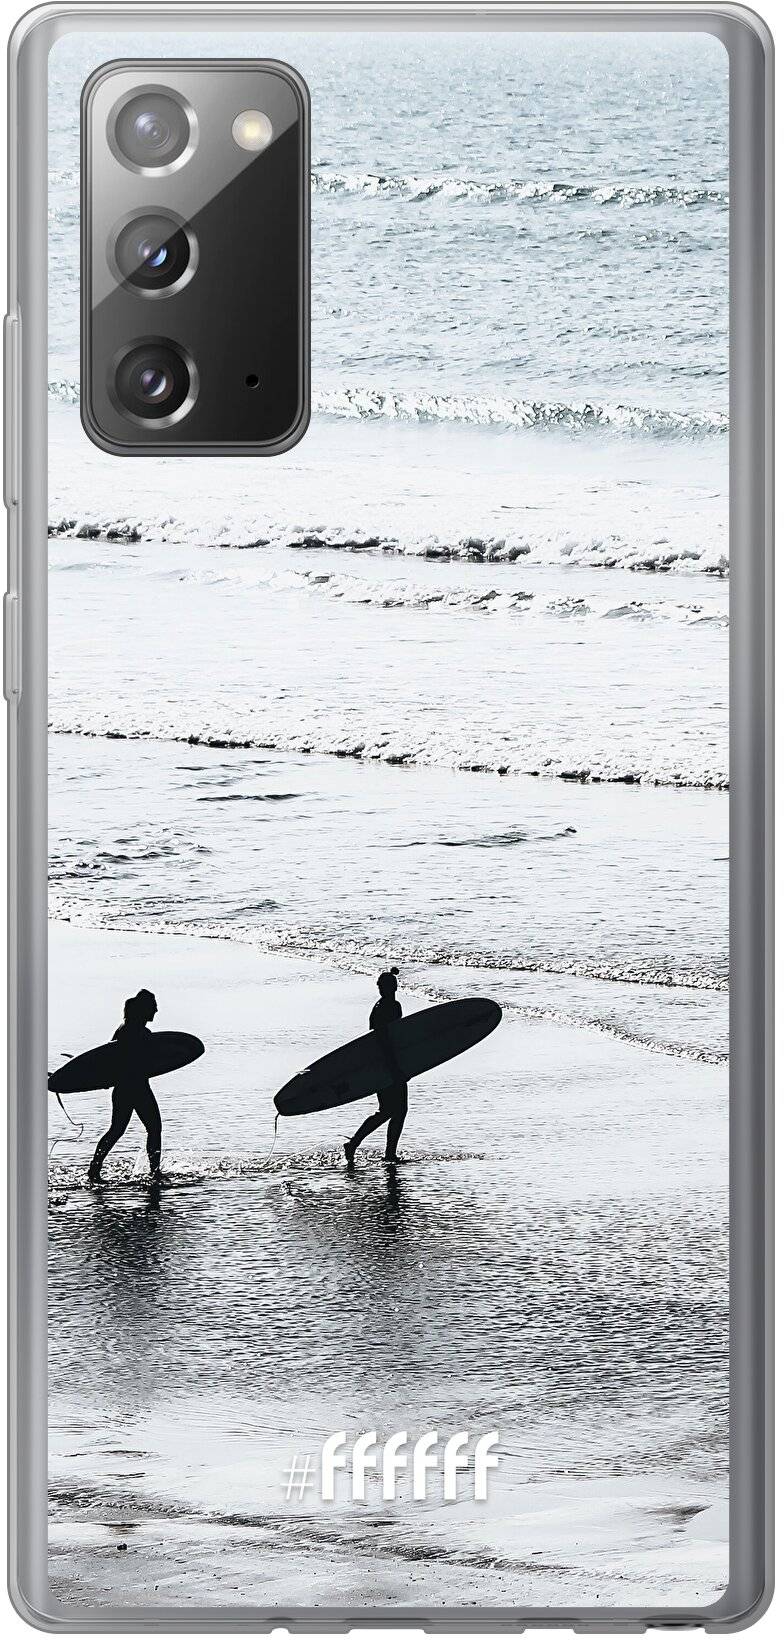 Surfing Galaxy Note 20